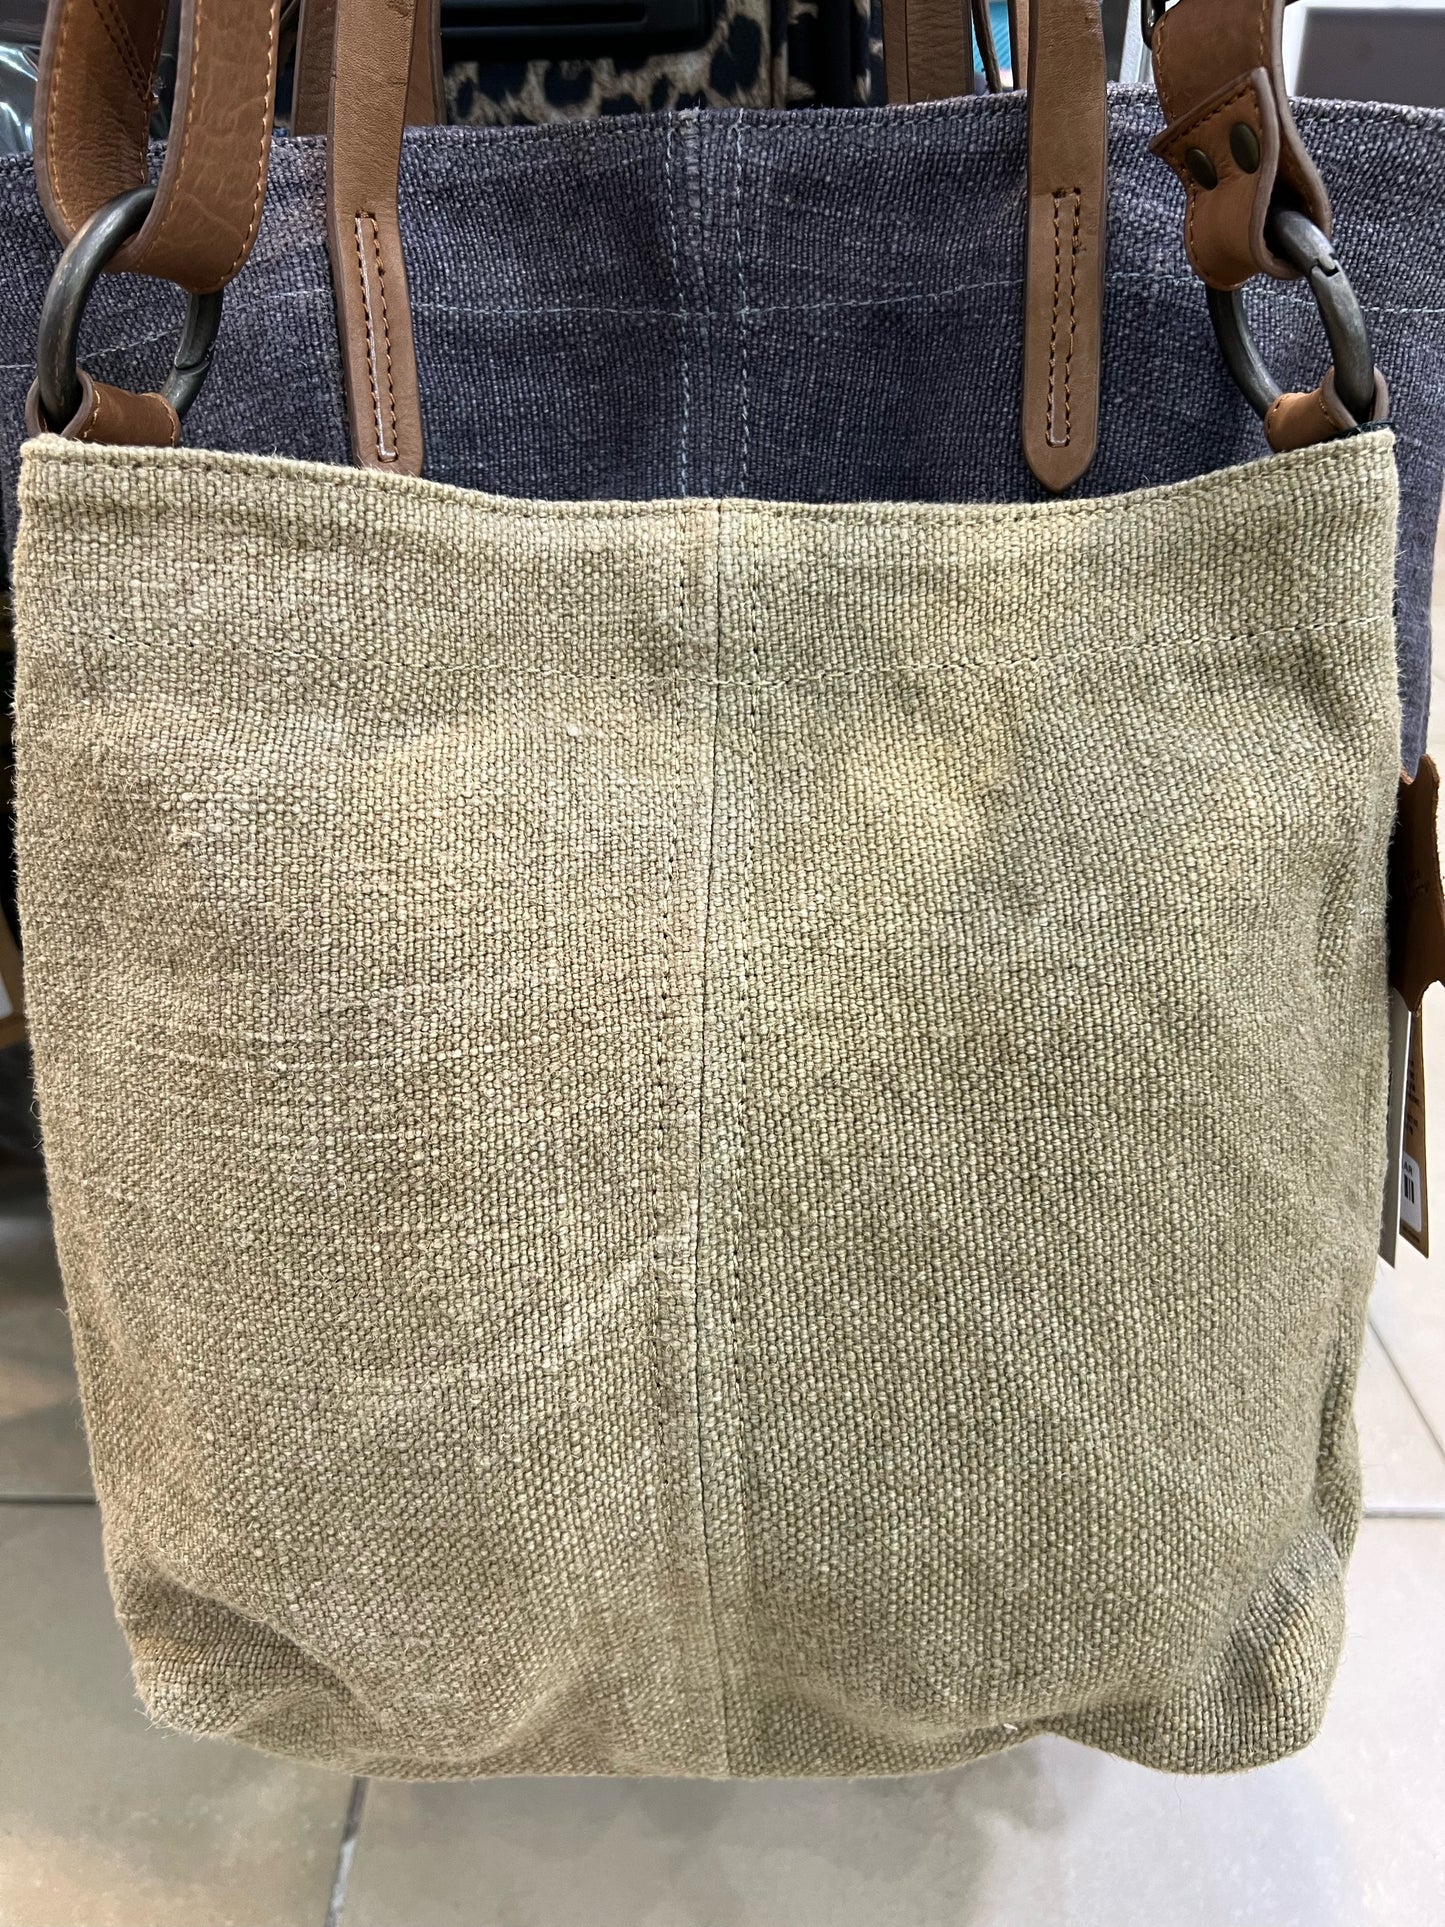 Rugged Hide - Marcy Medium Size Crossbody Jute/Leather Bag